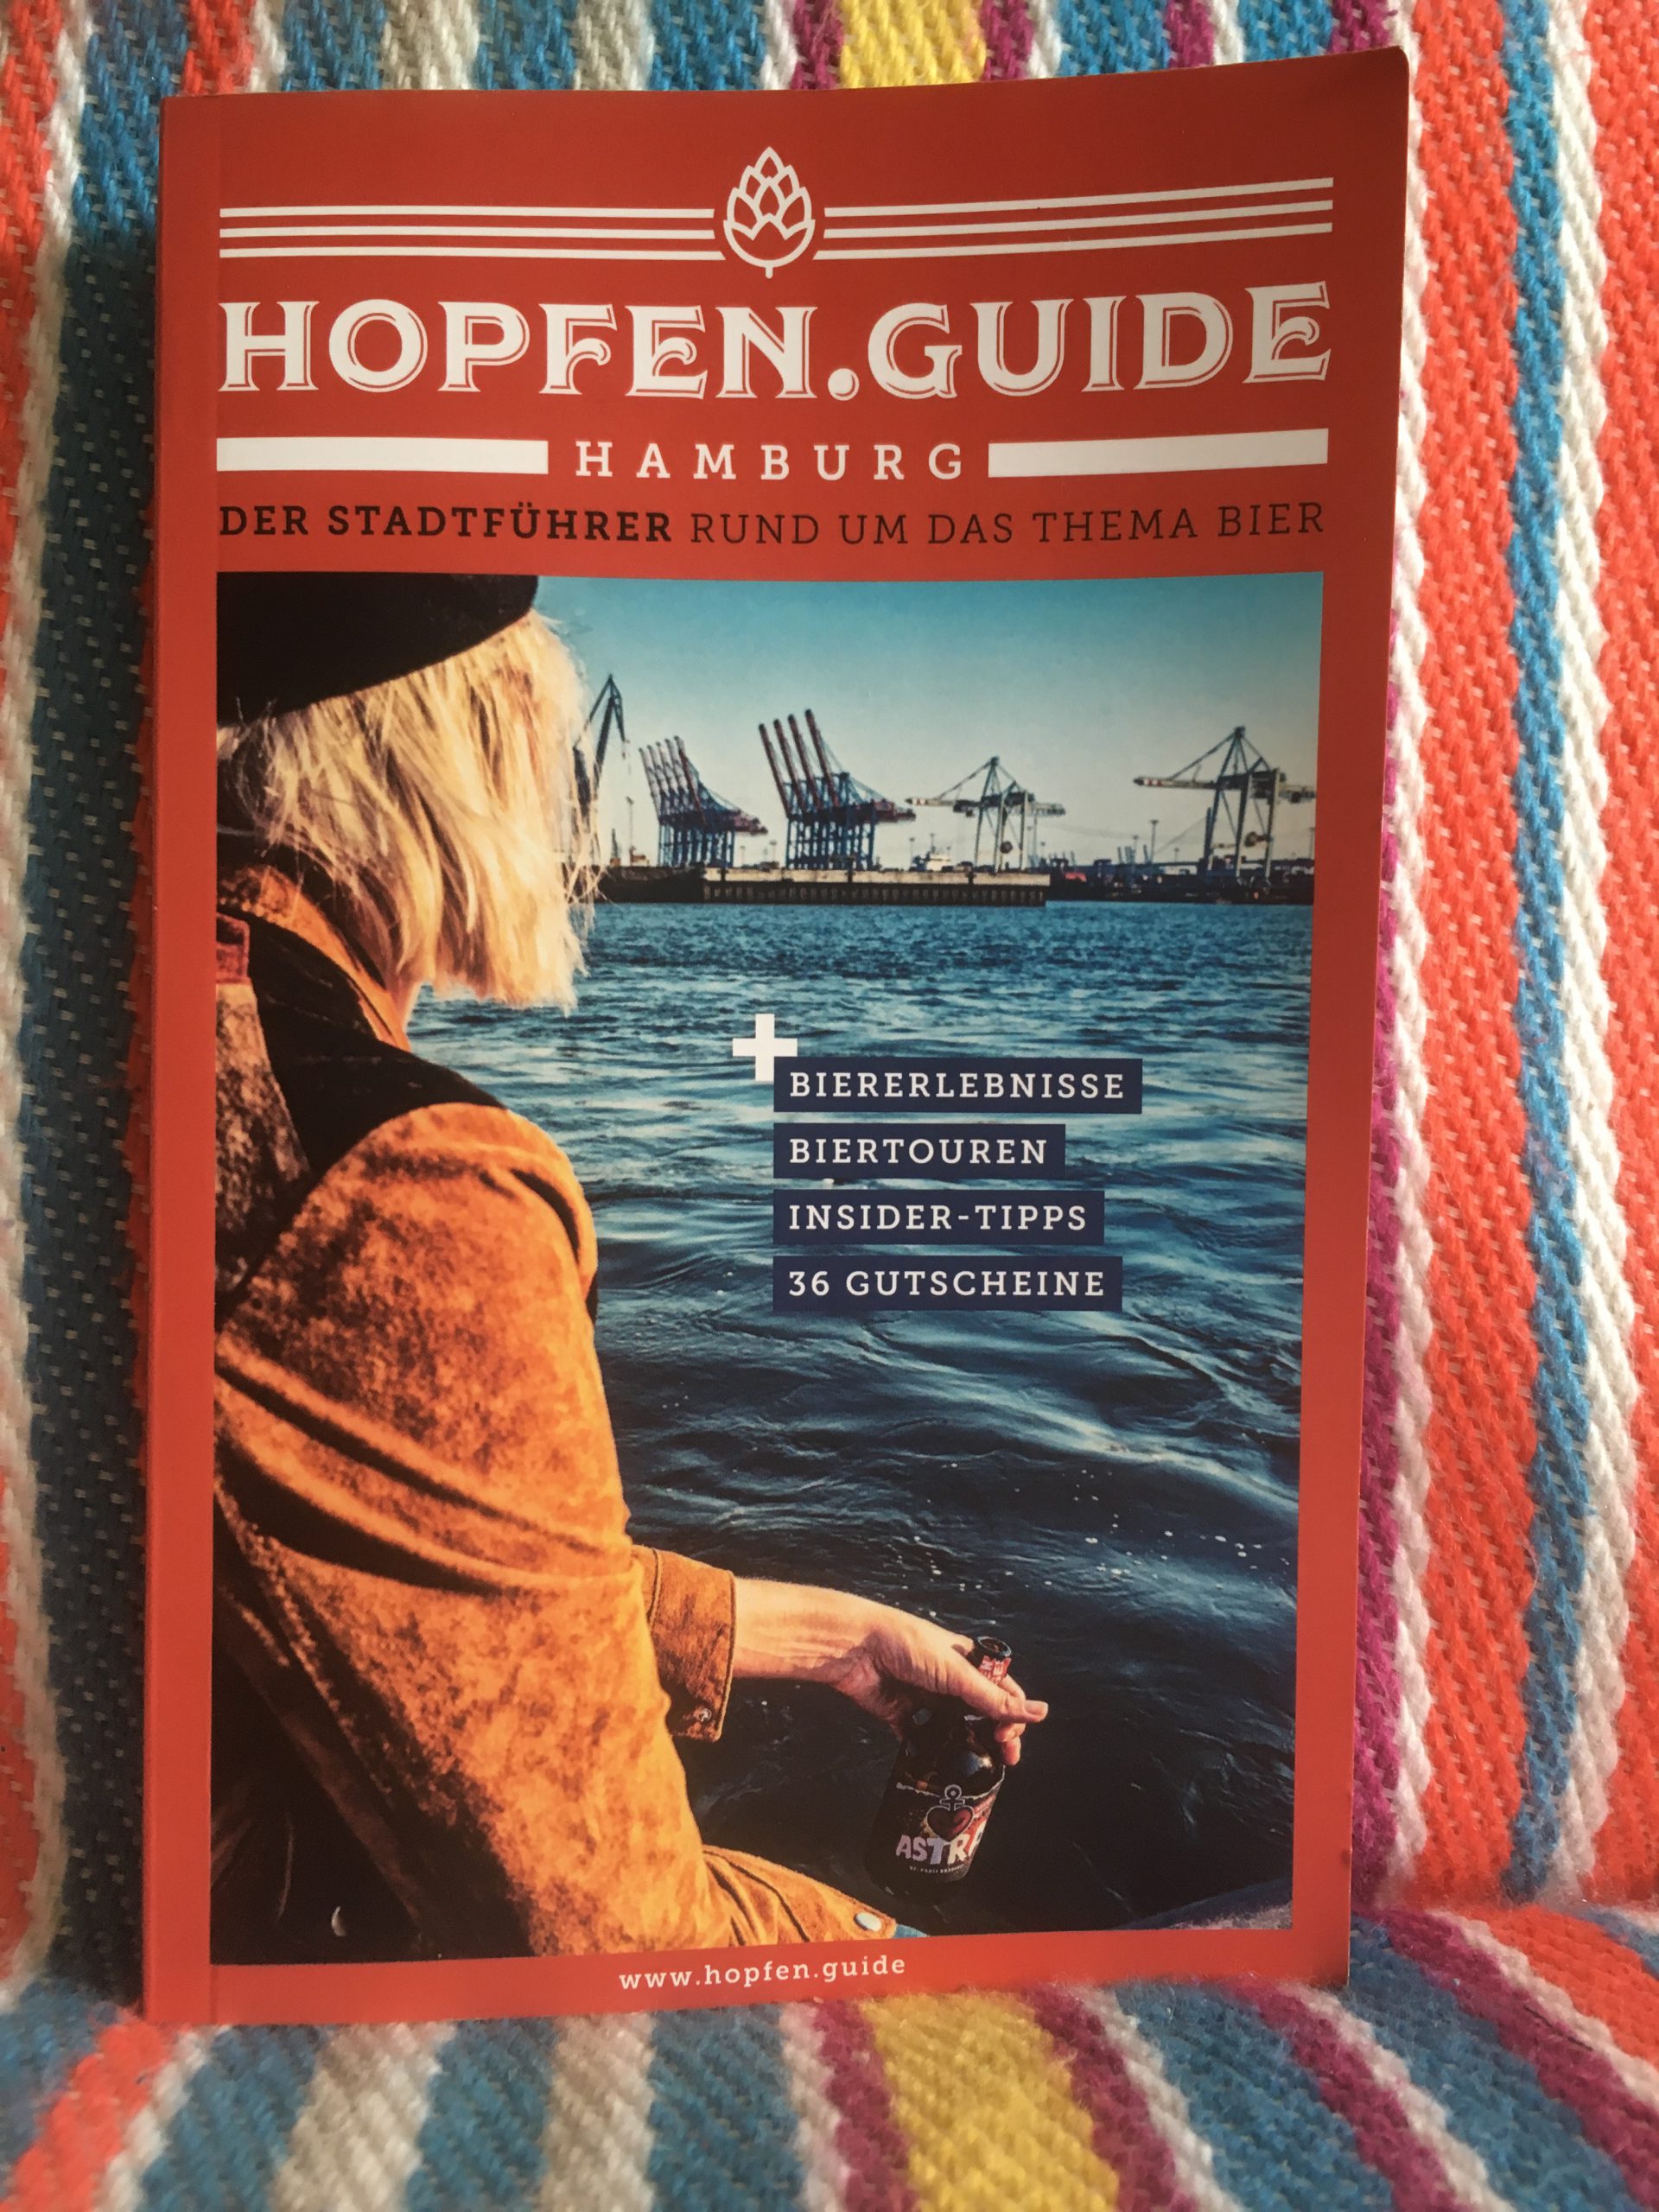 Hopfen.Guide Hamburg post thumbnail image